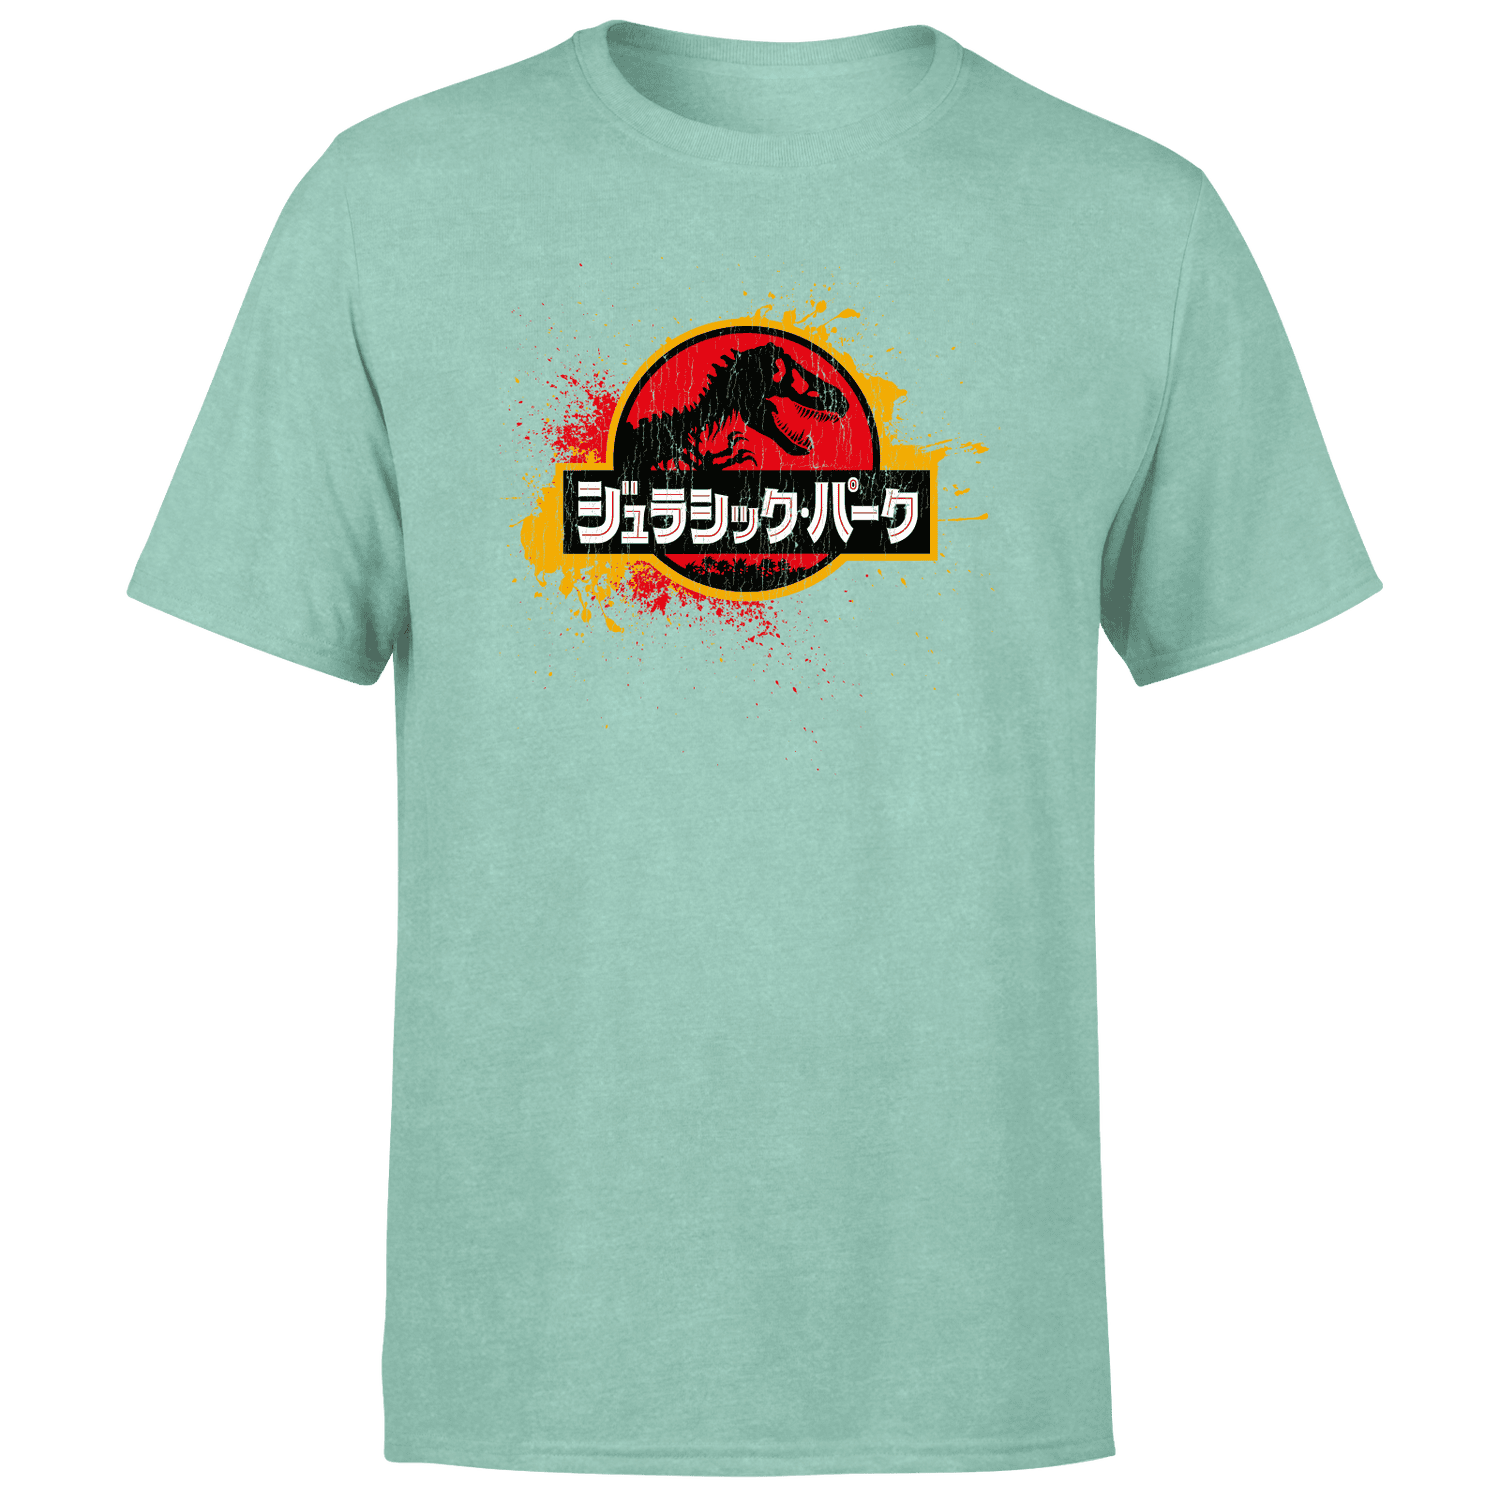 Jurassic Park Men's T-Shirt - Mint Acid Wash